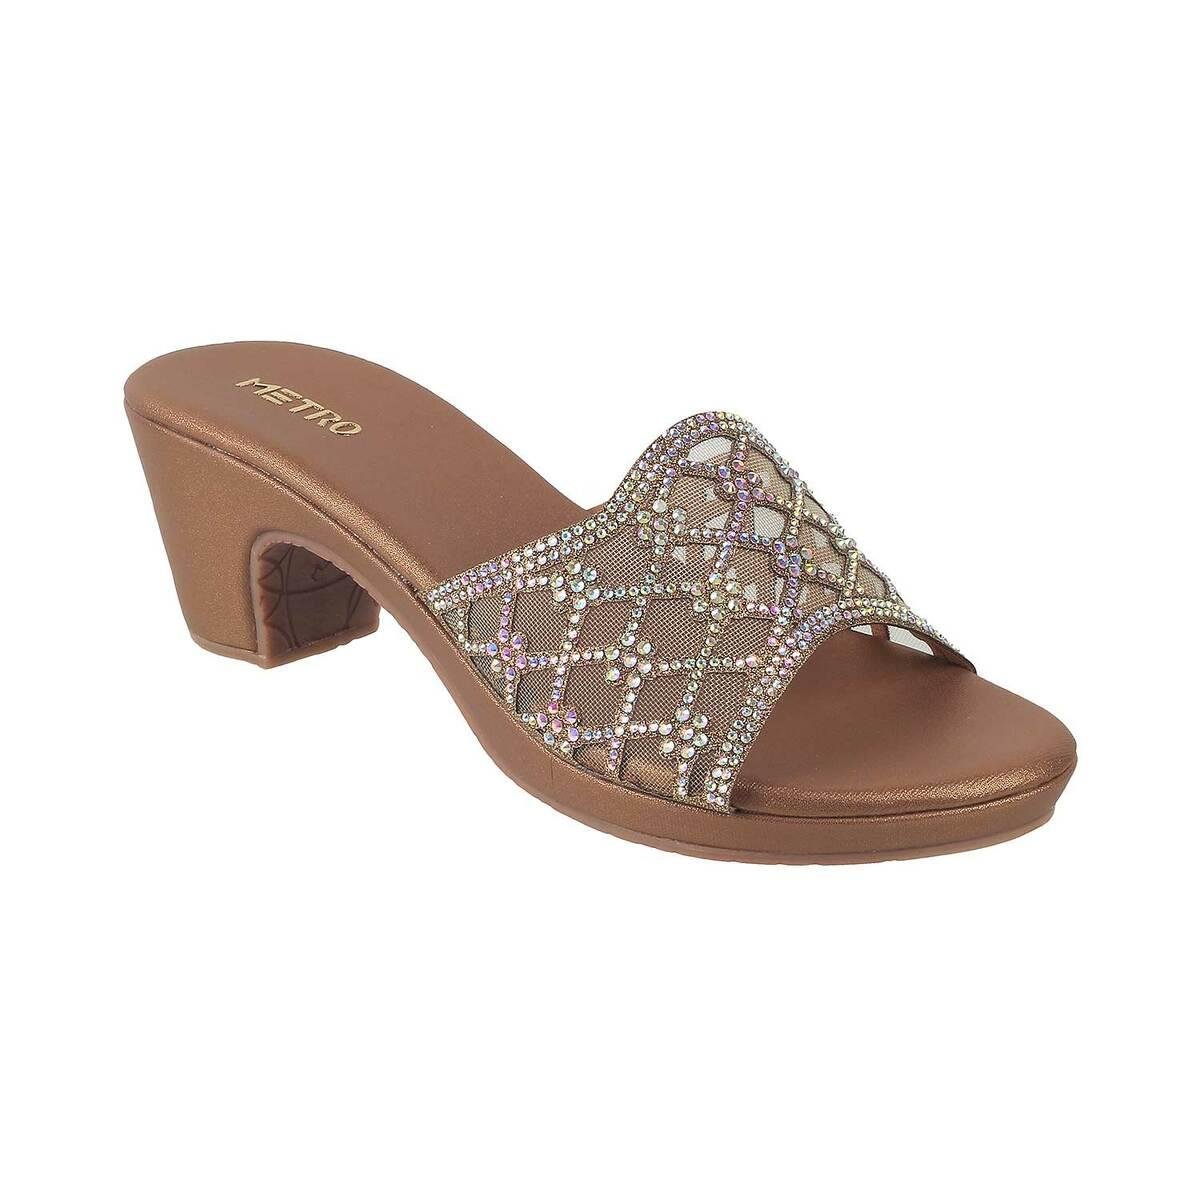 Buy Girls Grey Casual Sandals Online | SKU: 57-4926-29-30-Metro Shoes